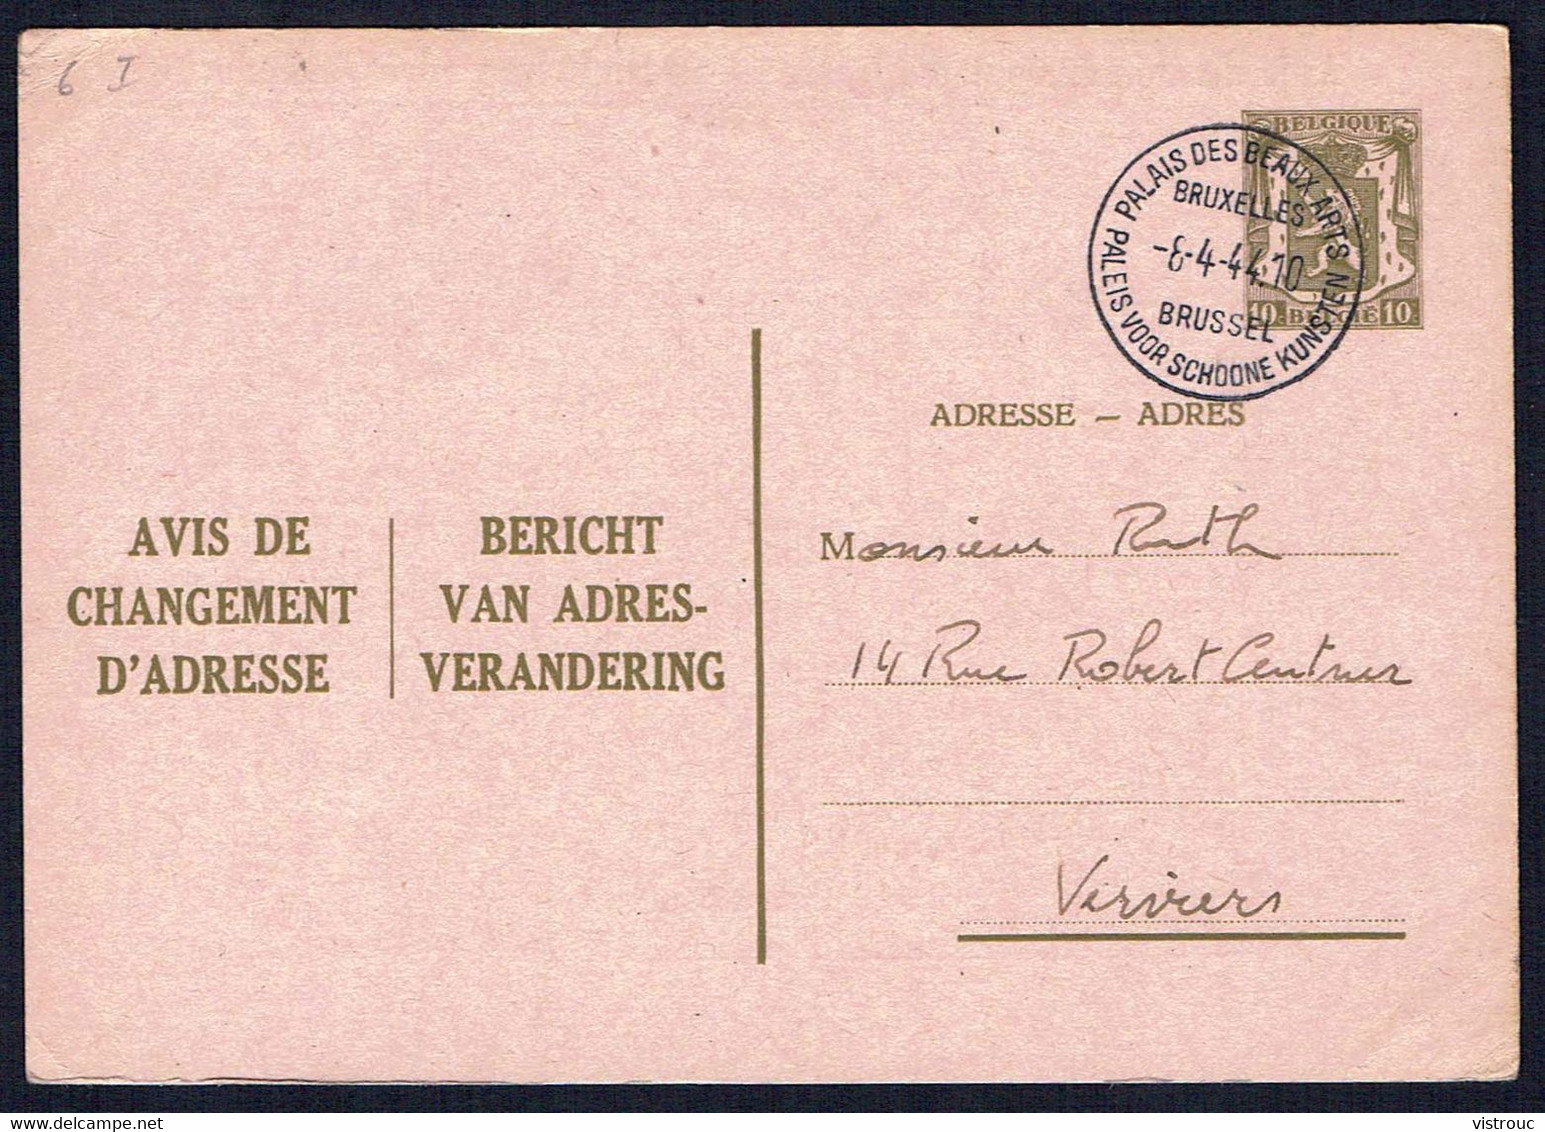 Changement D'adresse N° 6 I FN (texte Français/Néerlandais) - Circulé - Circulated - Gelaufen - 1944. - Addr. Chang.